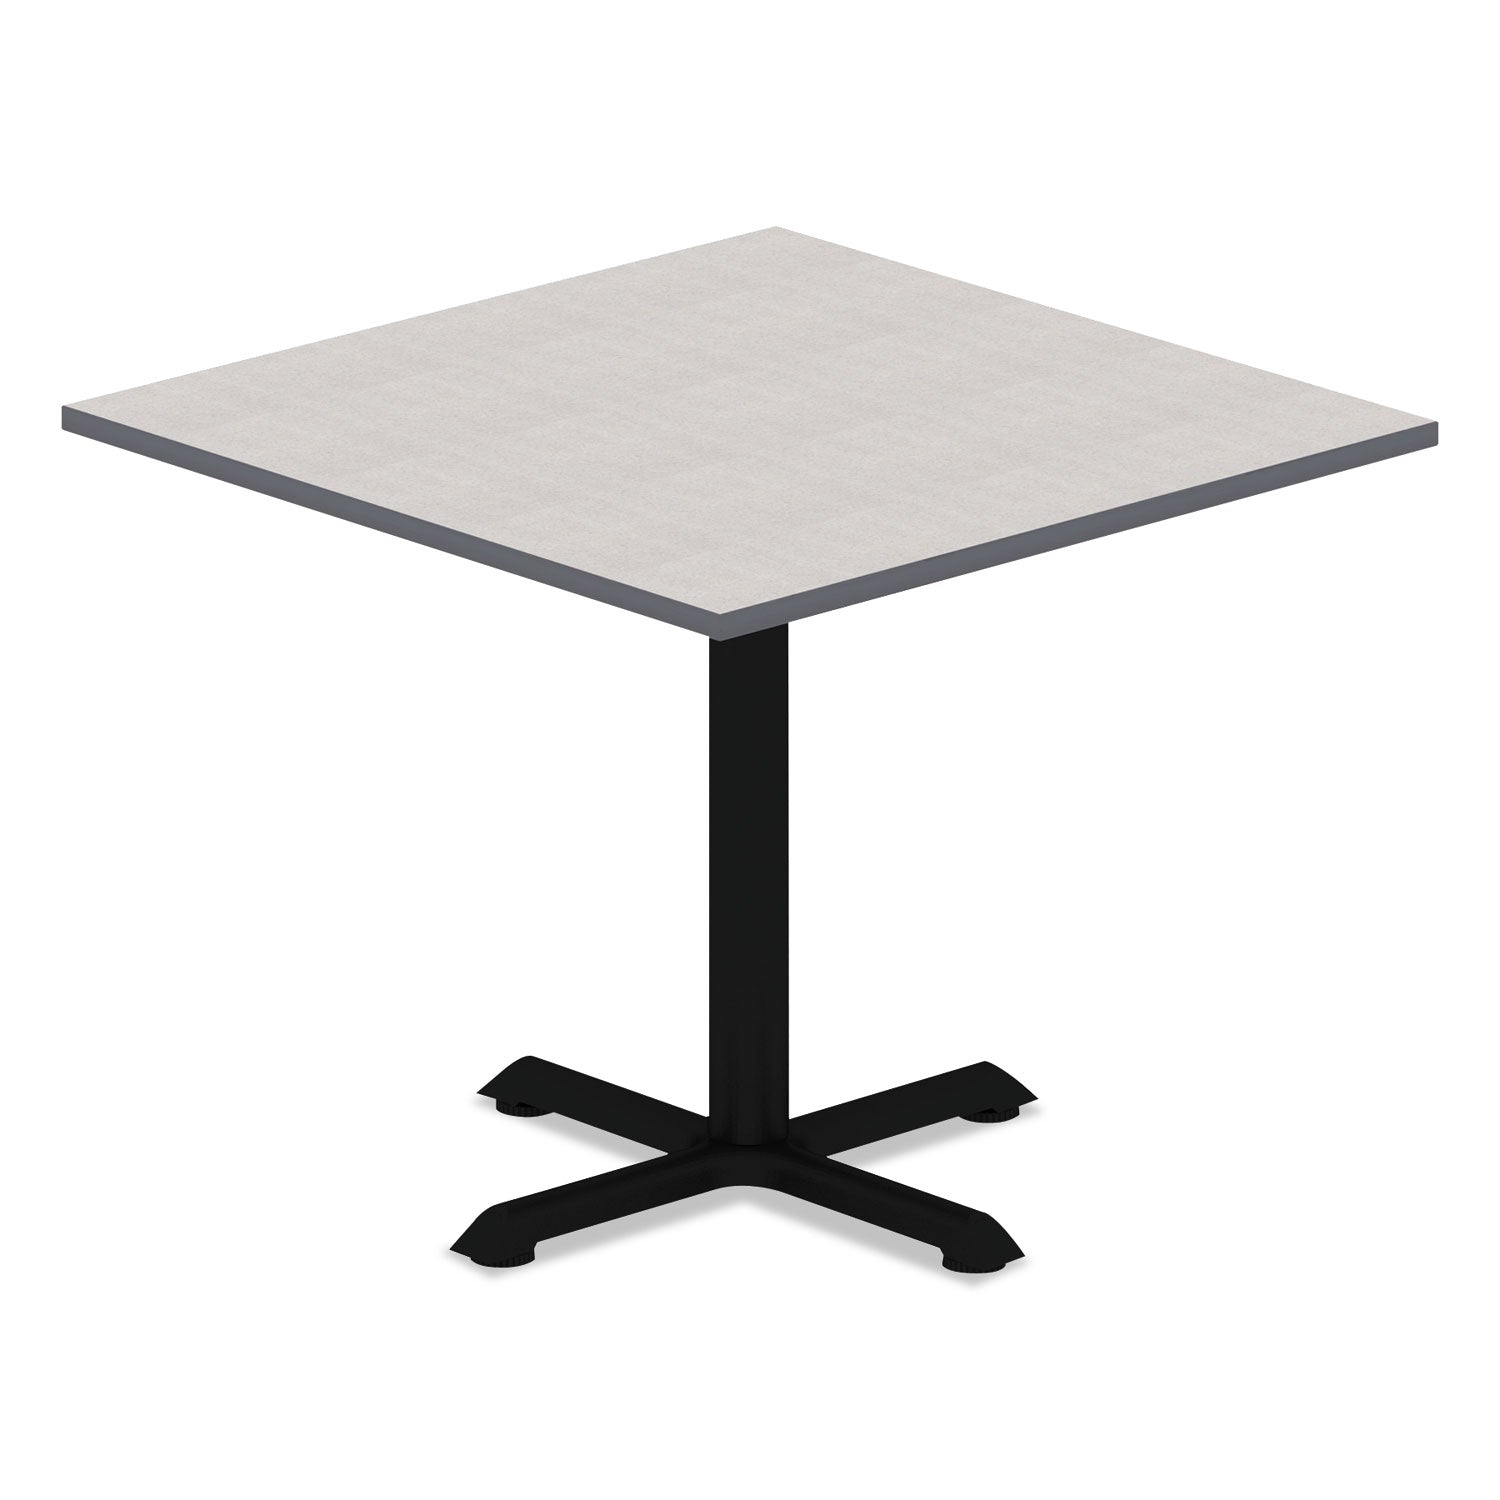 reversible-laminate-table-top-square-3538w-x-3538d-white-gray_alettsq36wg - 3